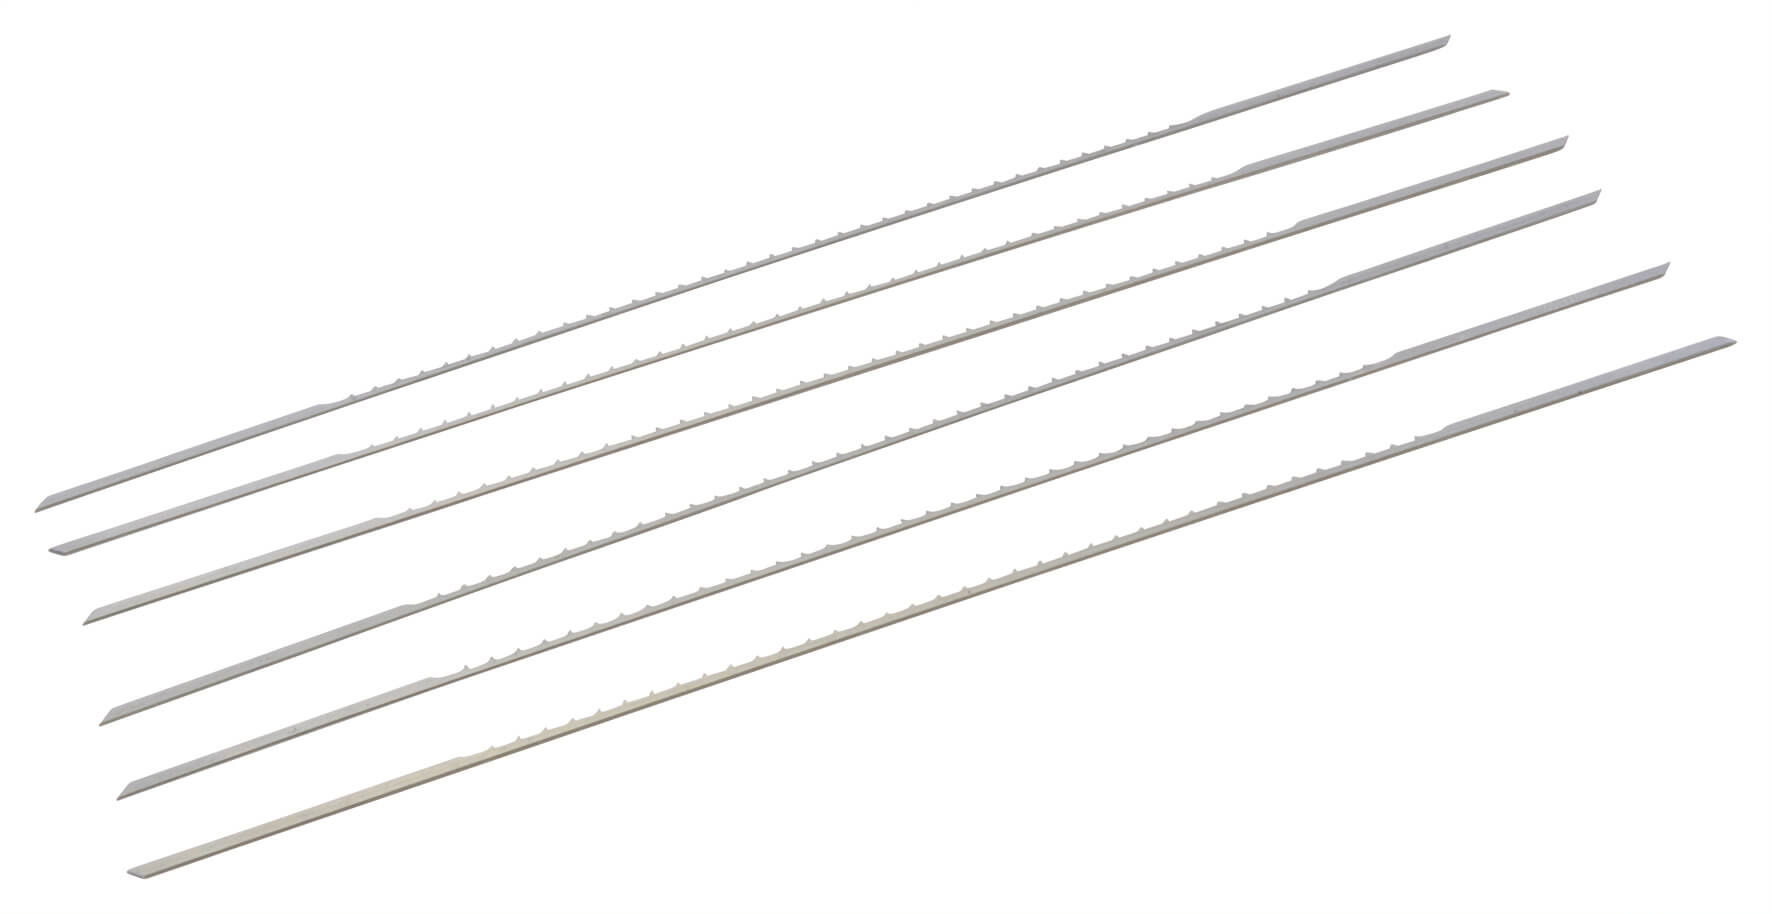 Olson Standard Fret Saw Blades - 12tpi (Pack of 6)